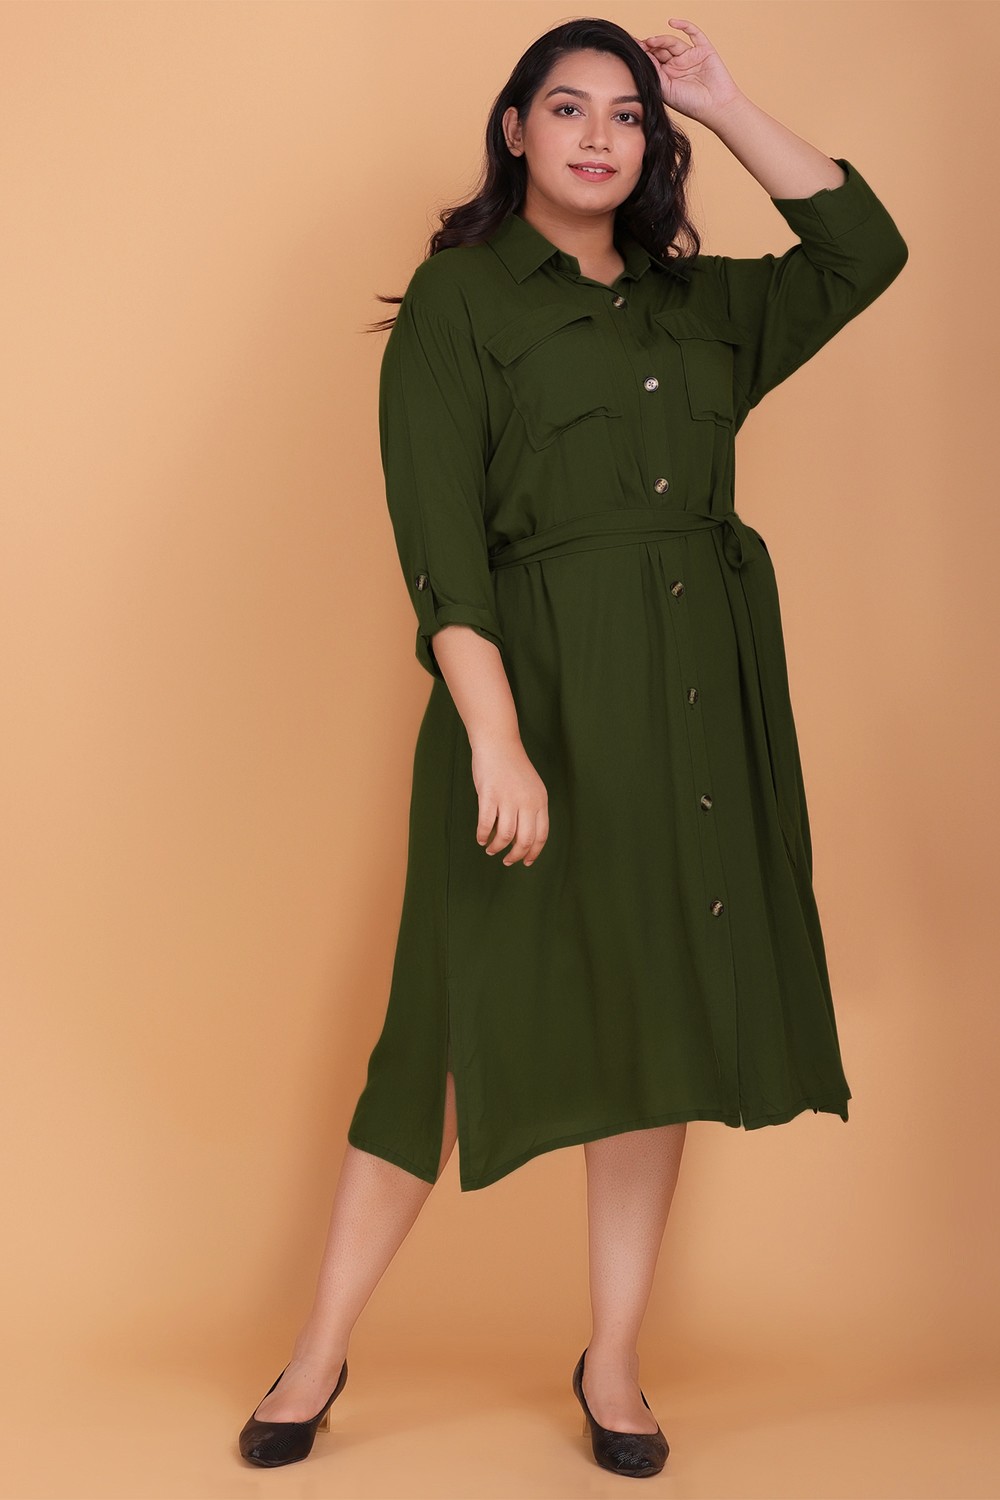 Jersey Slip Dress - Olive green - Ladies | H&M US